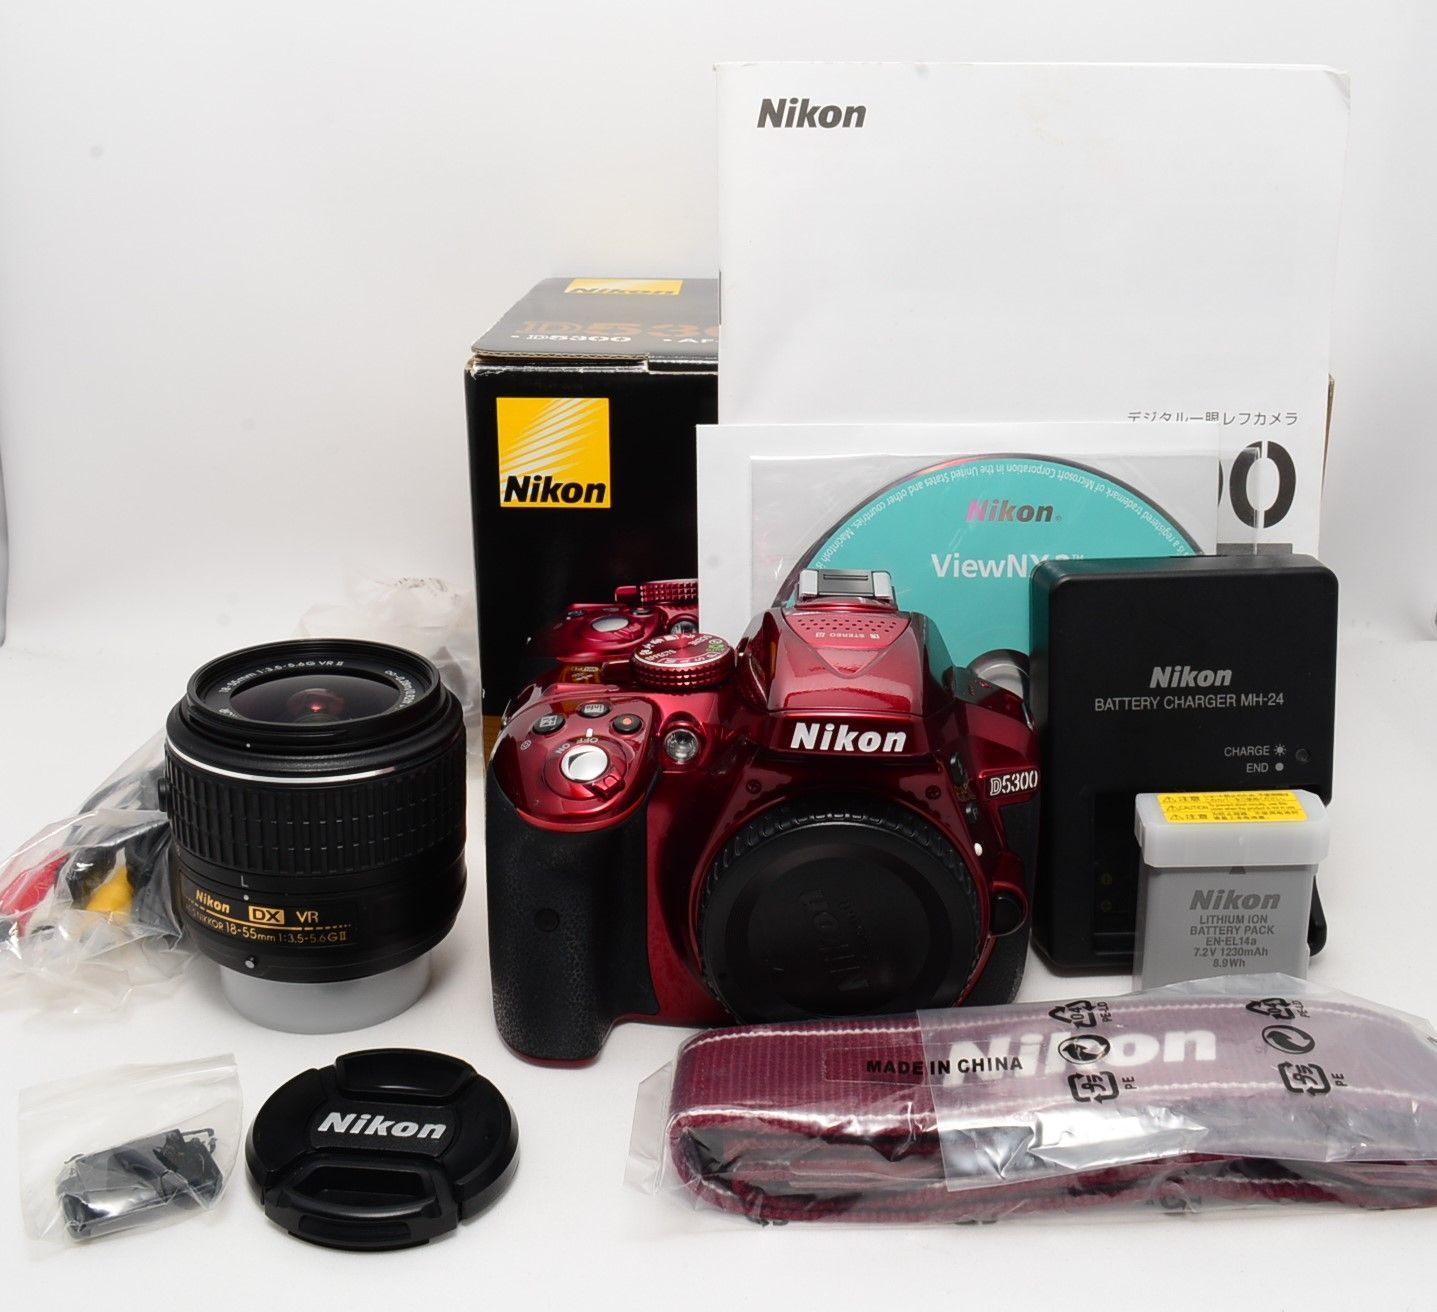 Nikon デジタル一眼レフカメラ D5300 18-55mm VR II レンズキット レッド 2400万画素 3.2型液晶  D5300LK18-55VR2RD